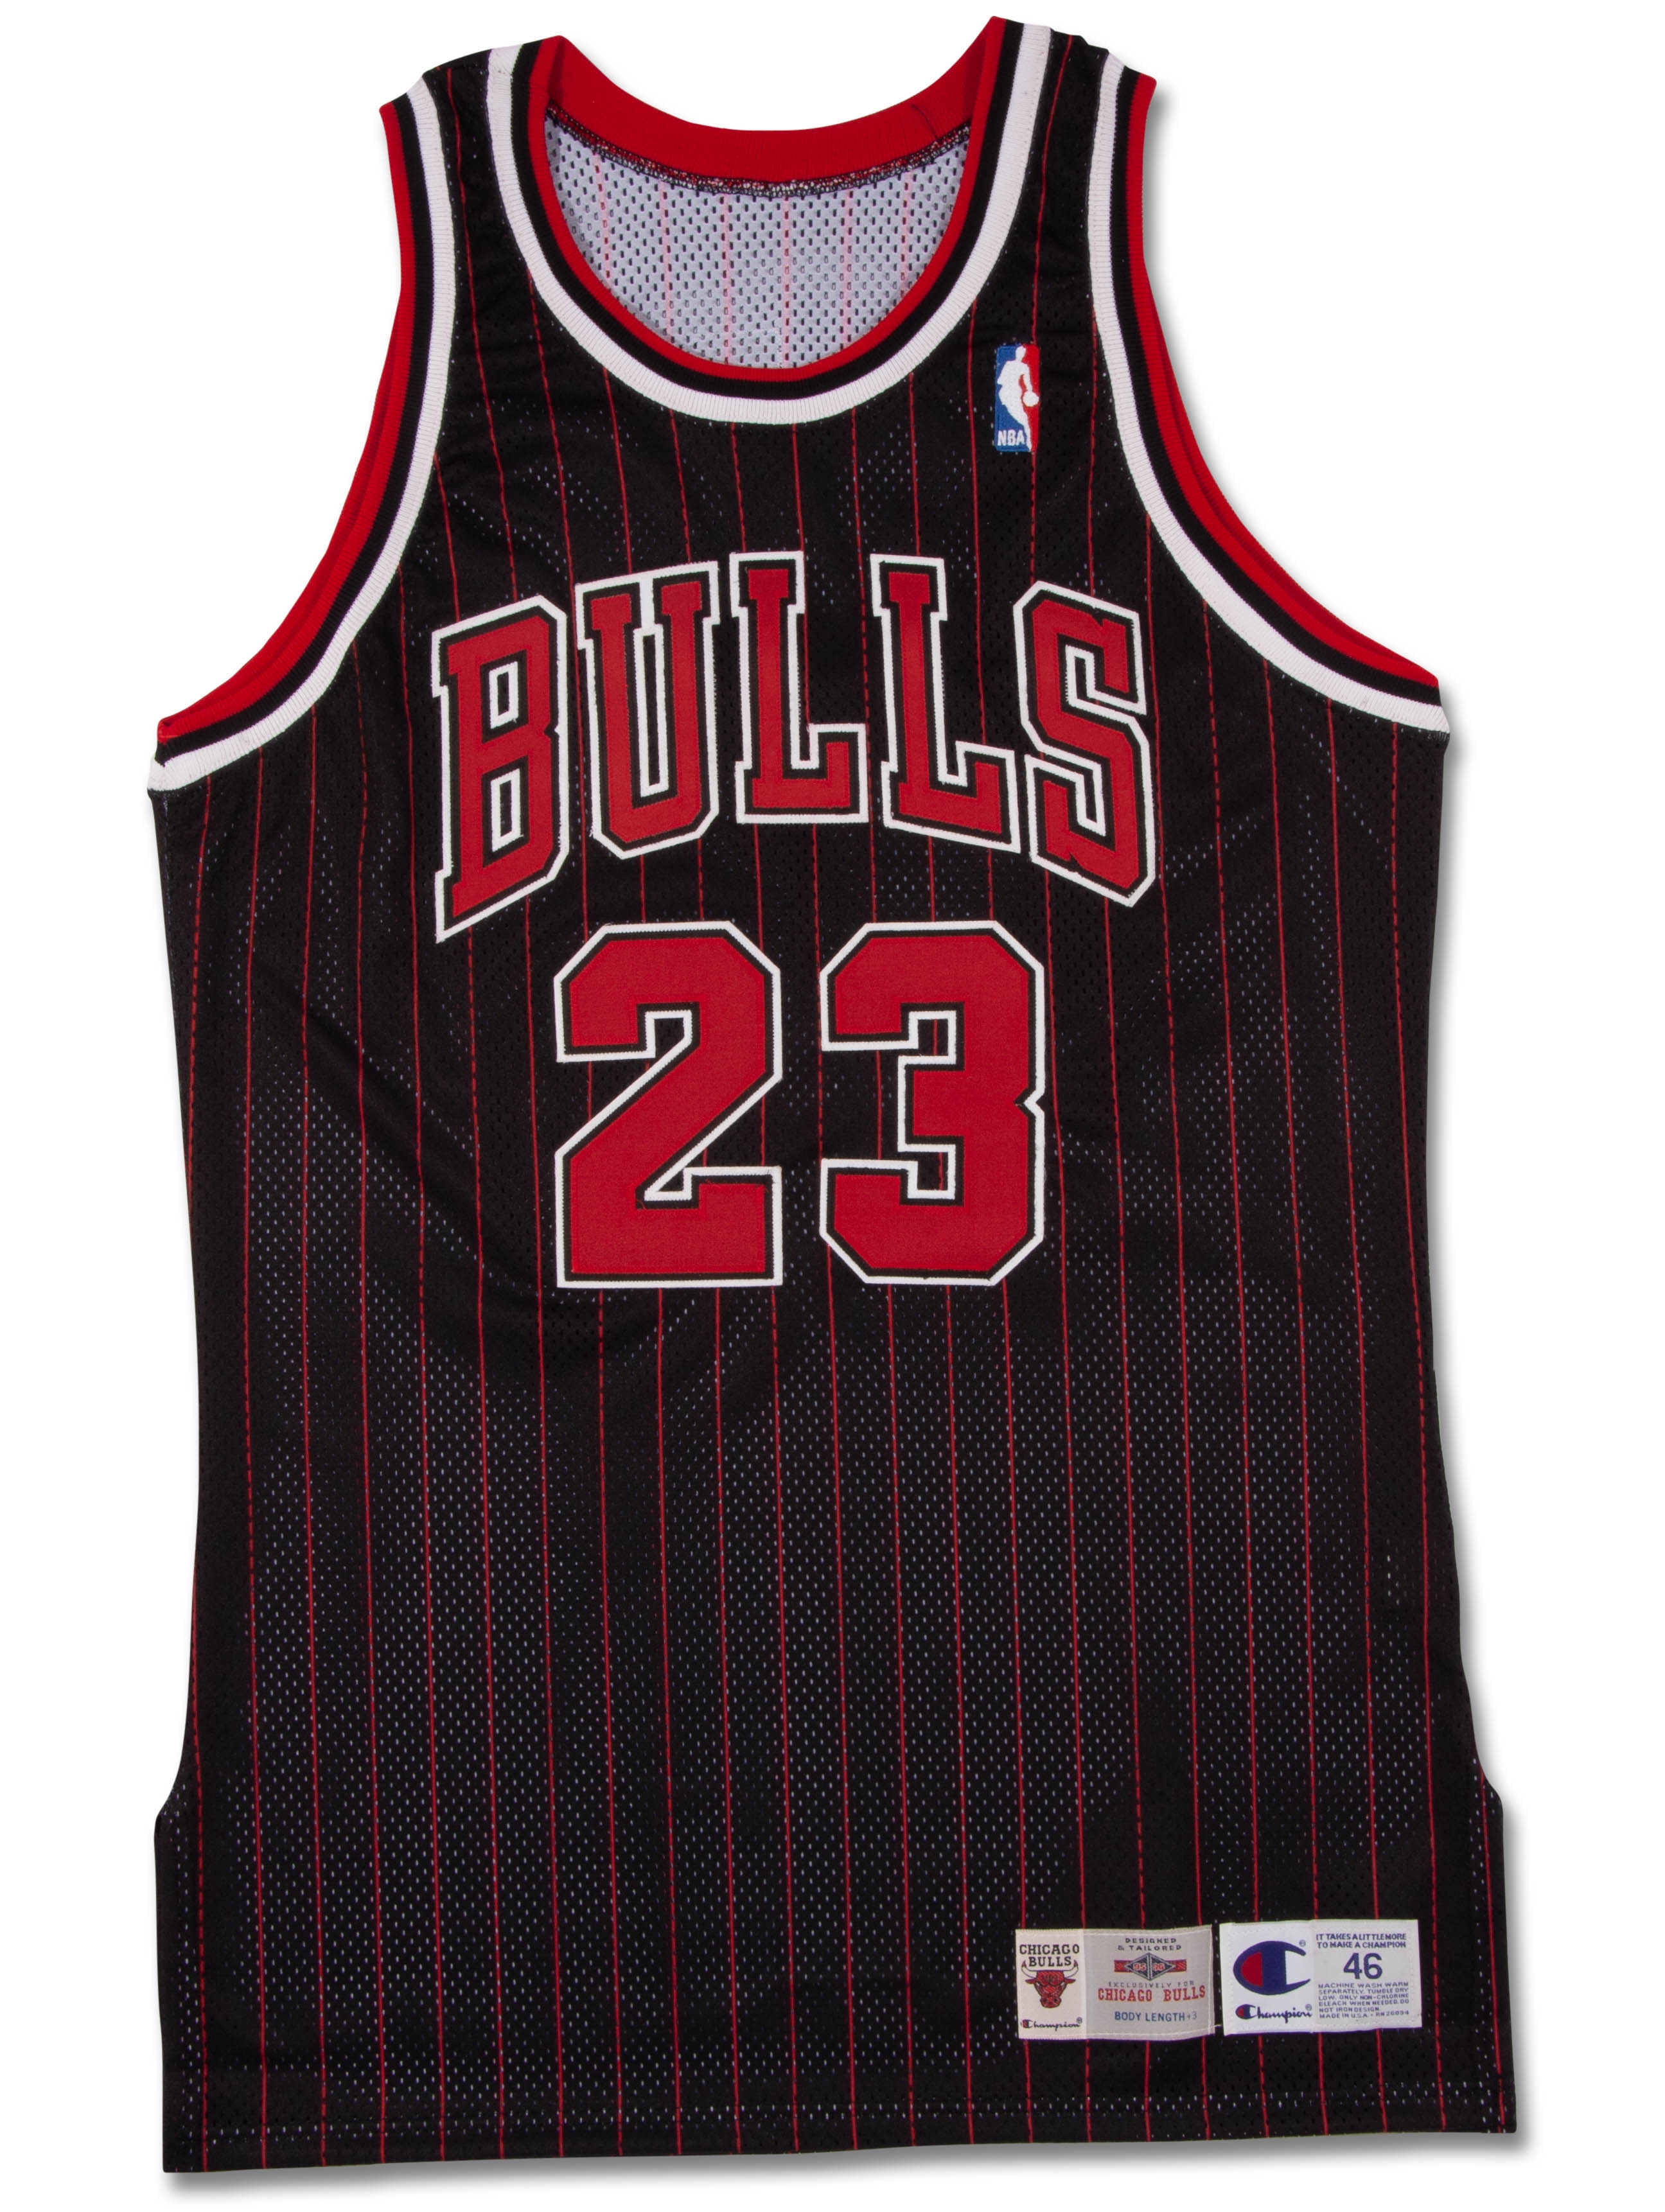 Michael Jordan Signed Jersey Numbers #23 Display Upper Deck Uda Coa Auction